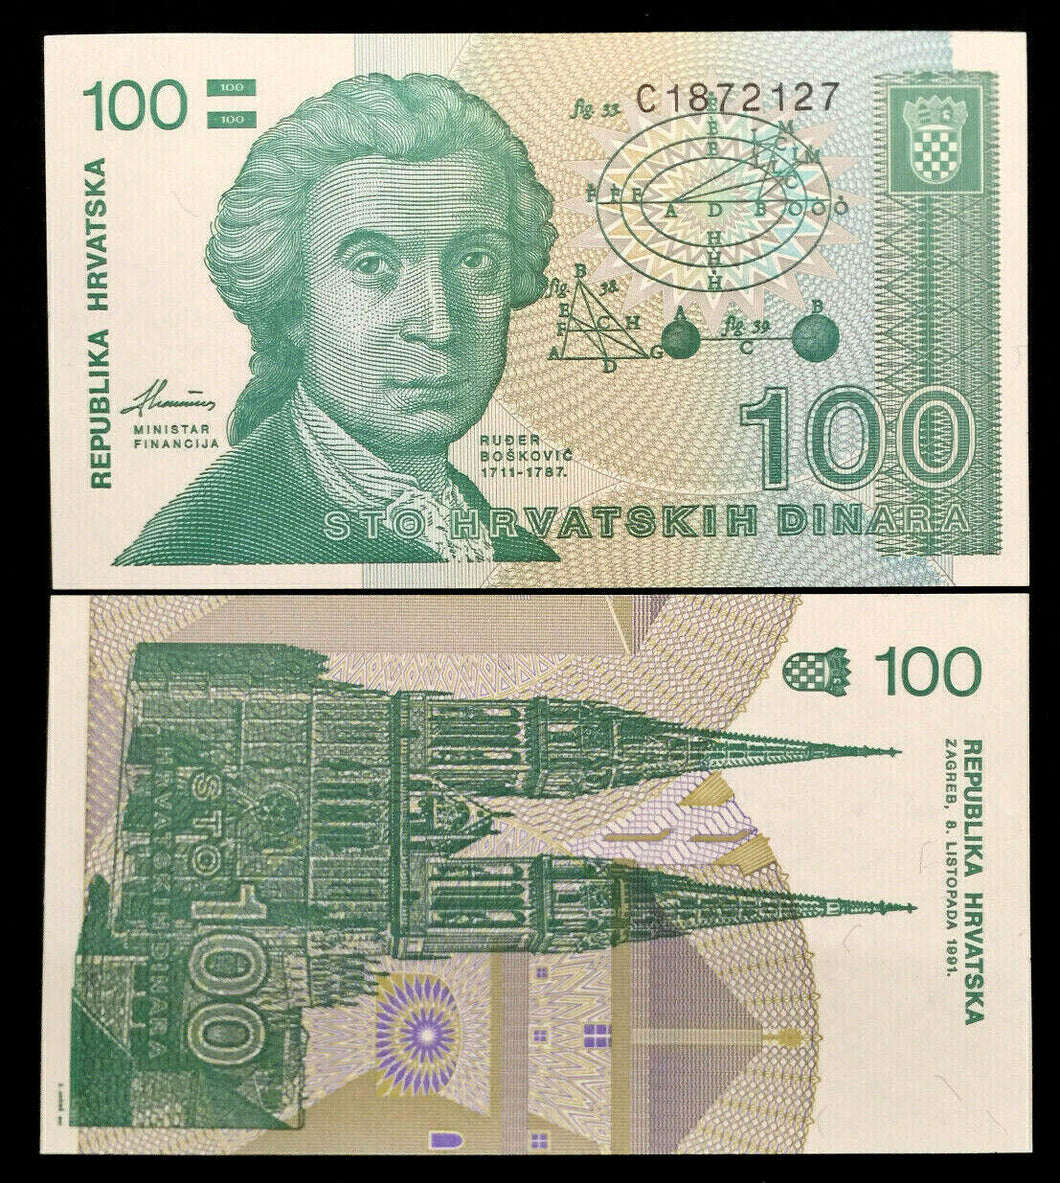 Croatia 100 Dinars 1991 Banknote World Paper Money UNC Currency Bill Note